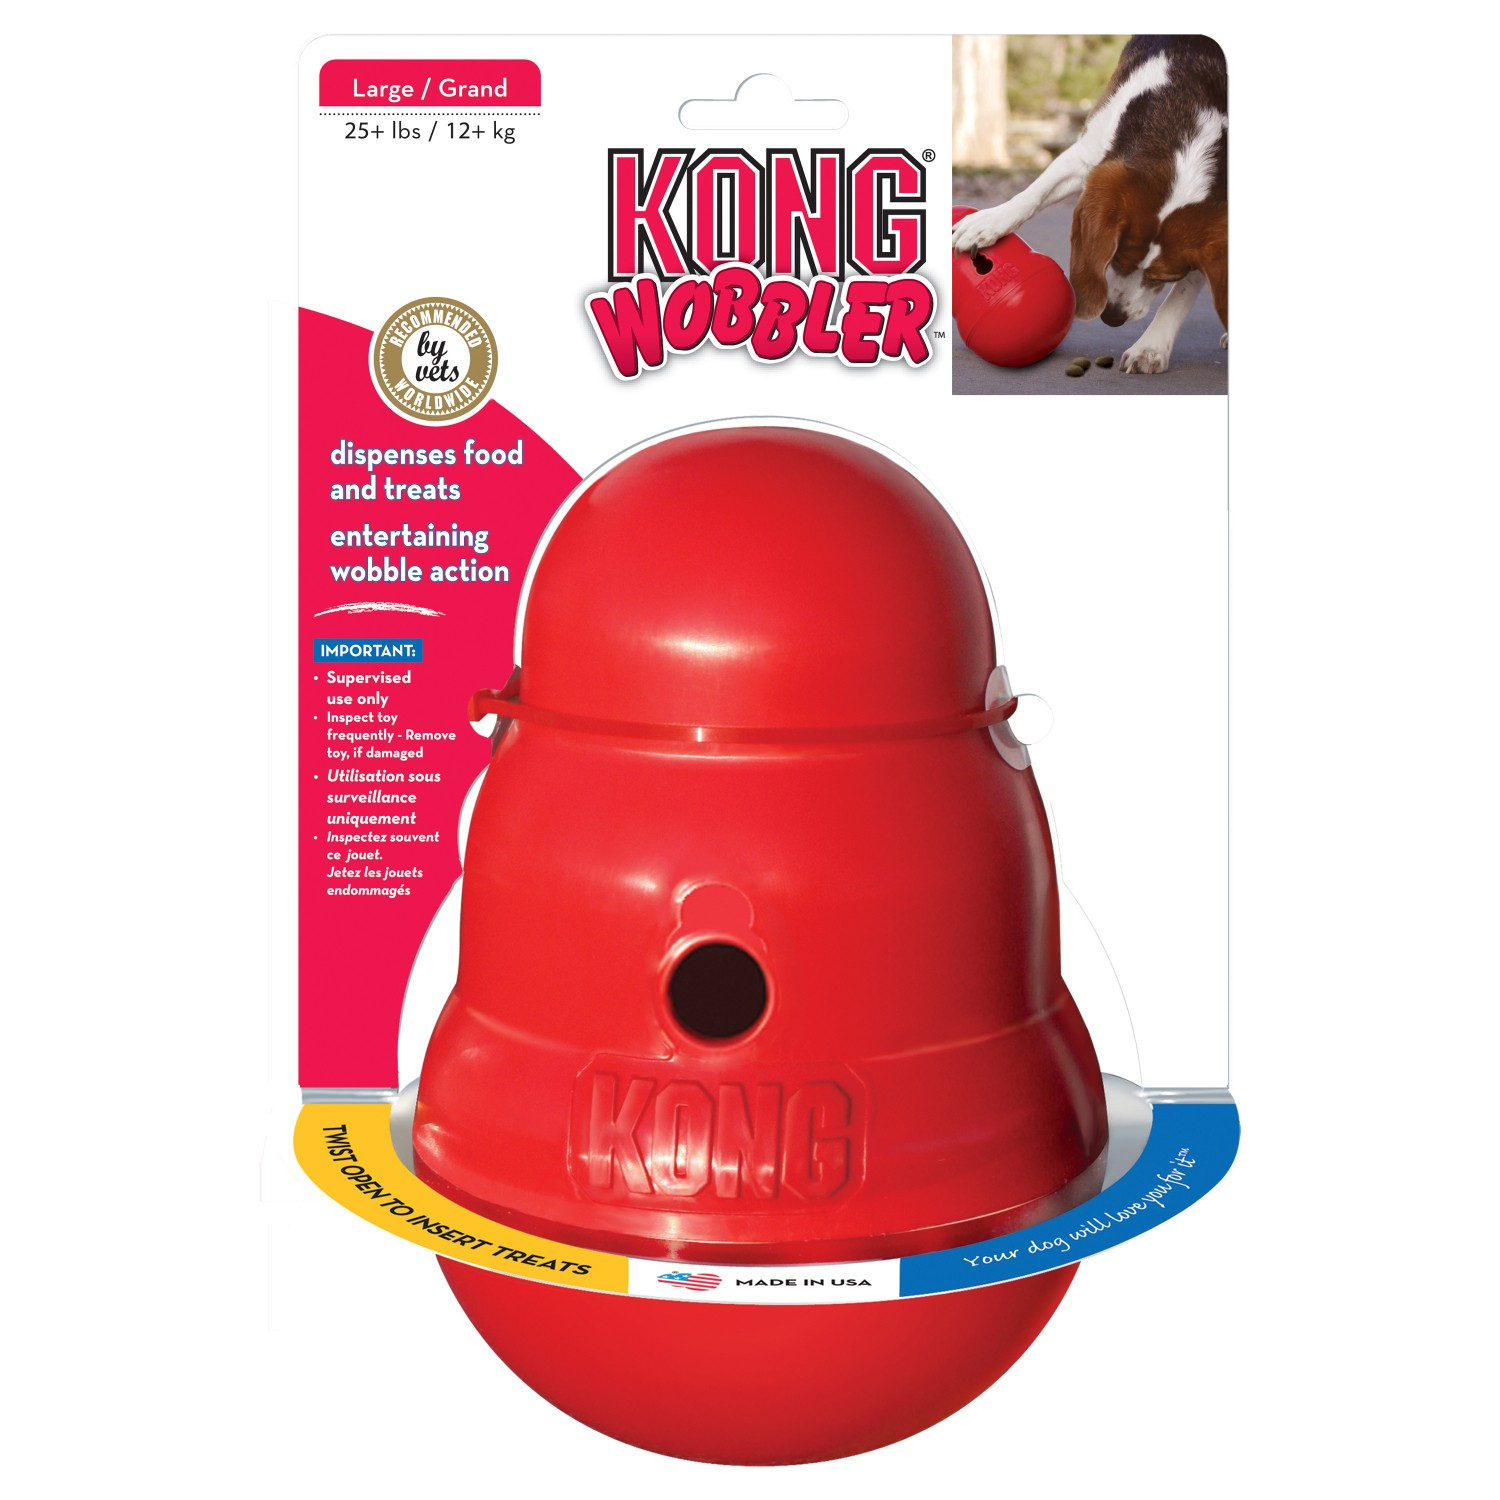 KONG Wobbler - Juguete dispensador de premios